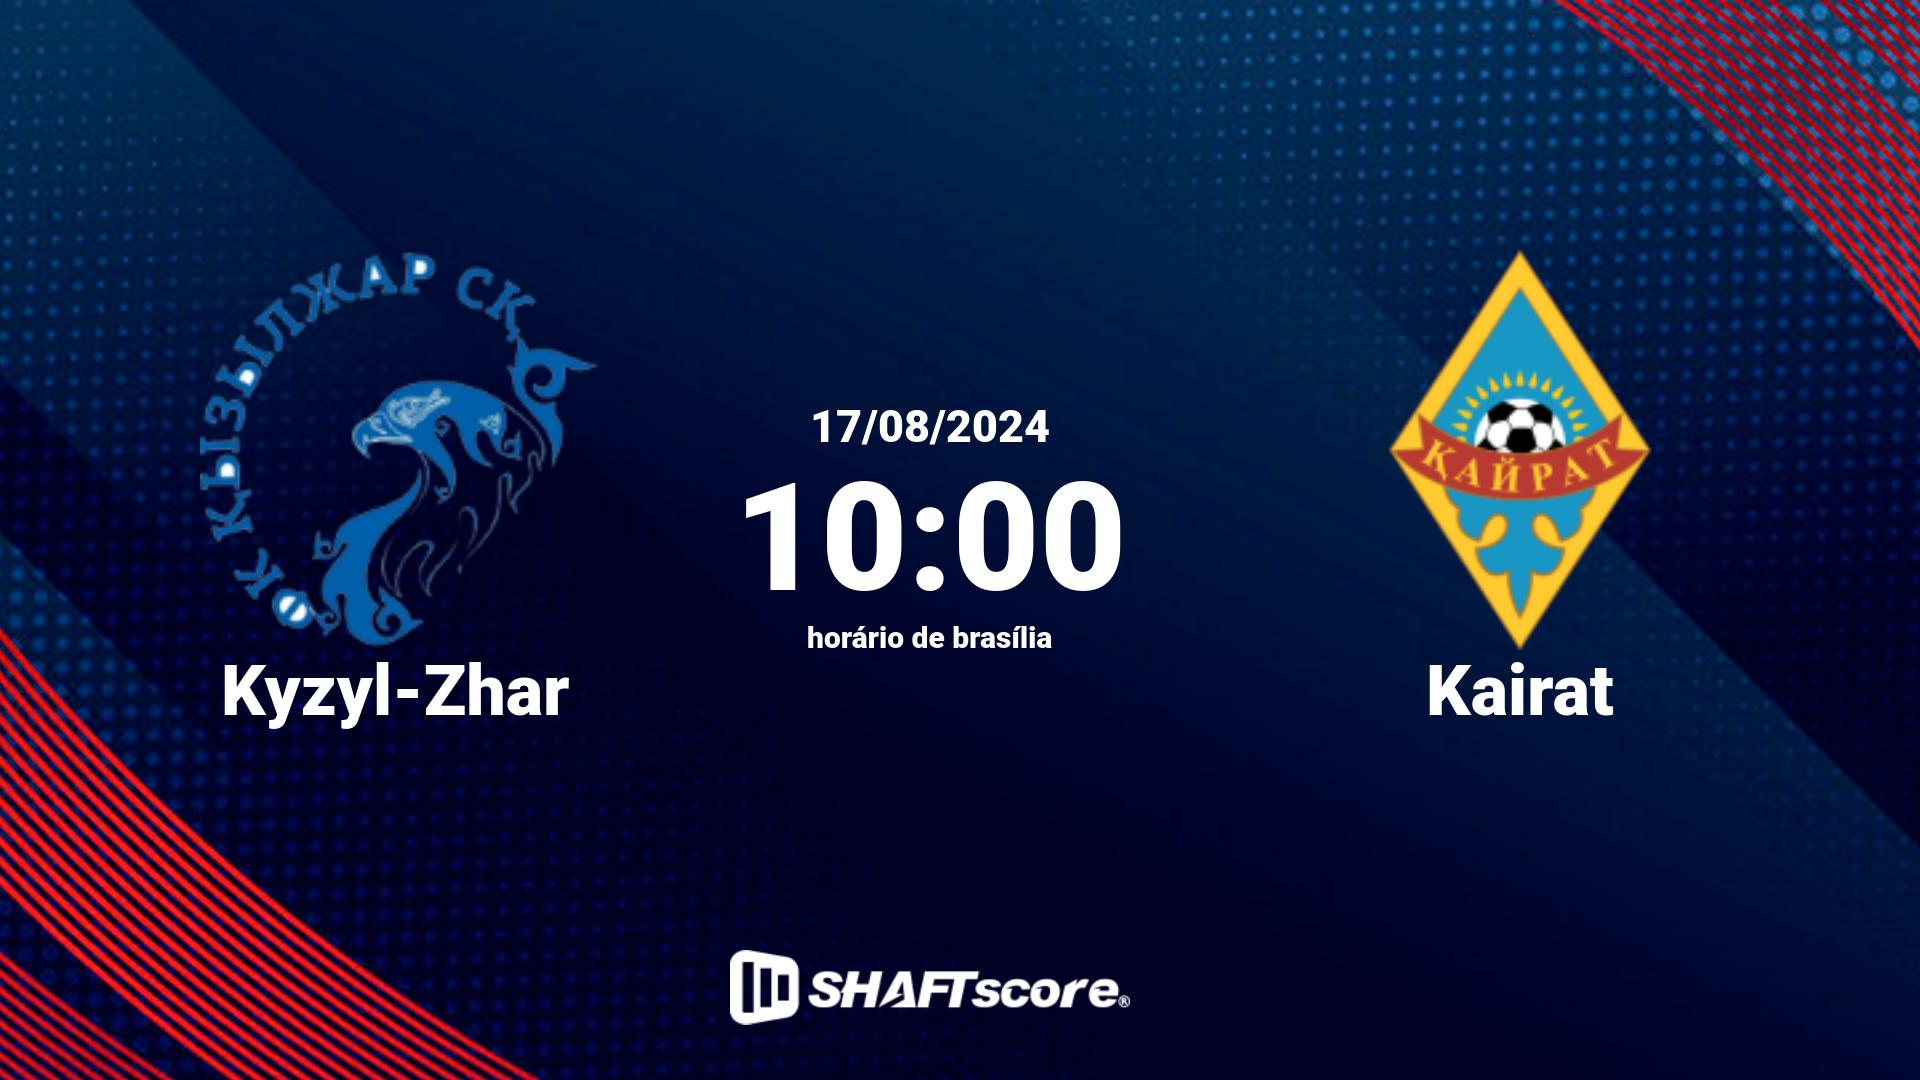 Estatísticas do jogo Kyzyl-Zhar vs Kairat 17.08 10:00